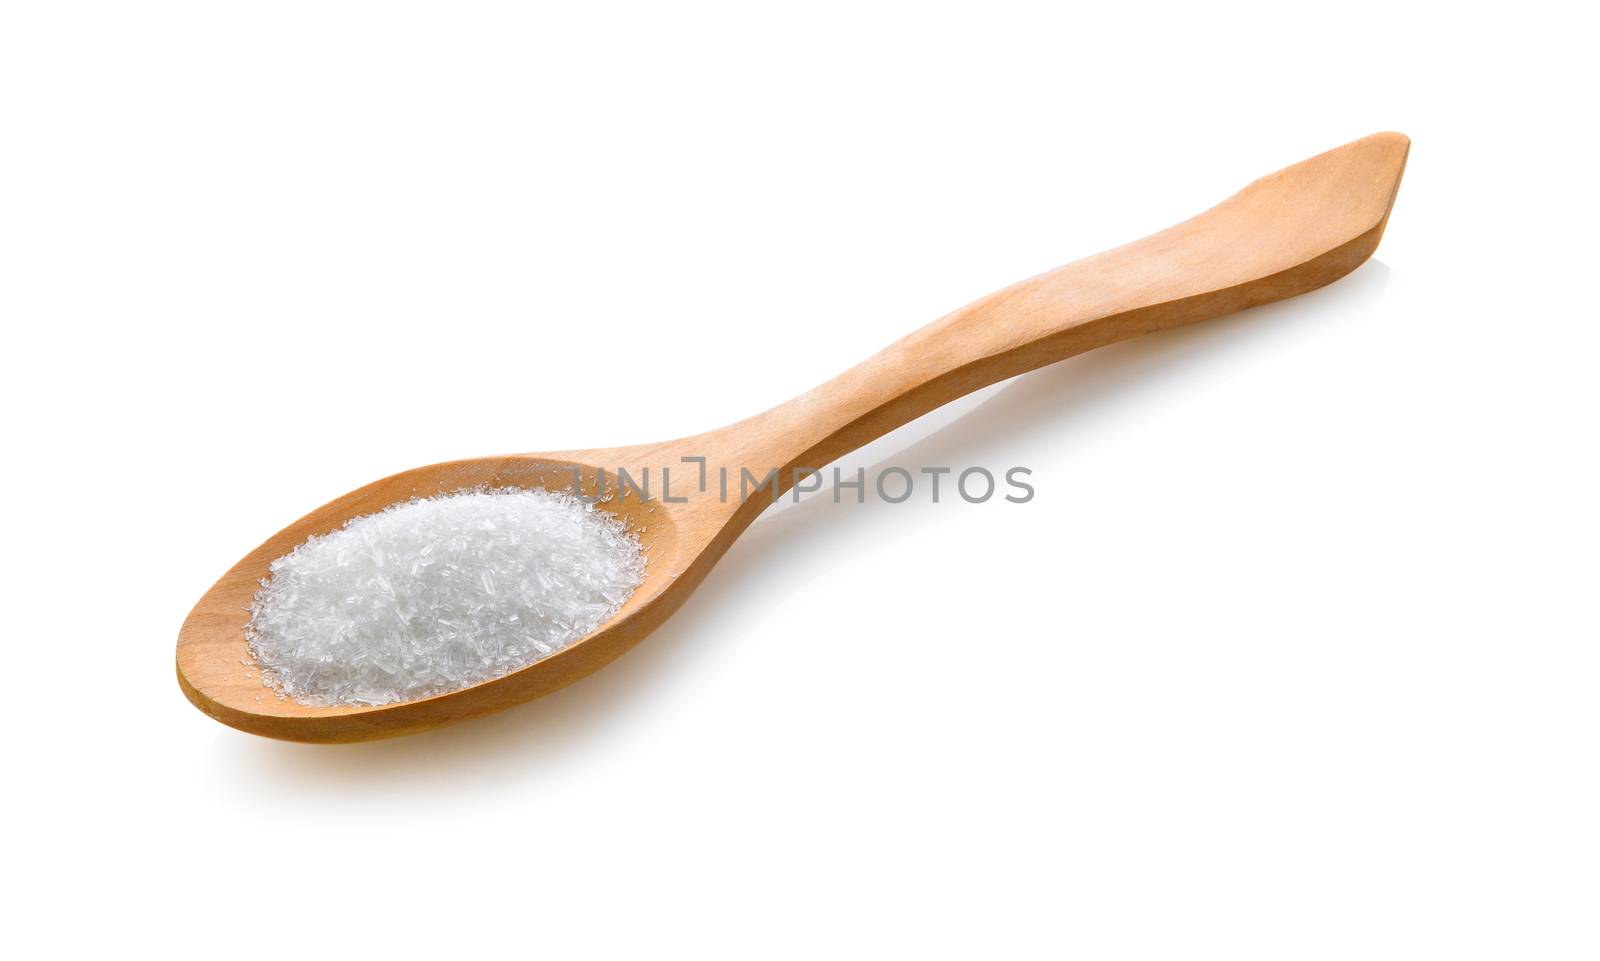 monosodium glutamate in wood spoon on white background by sommai